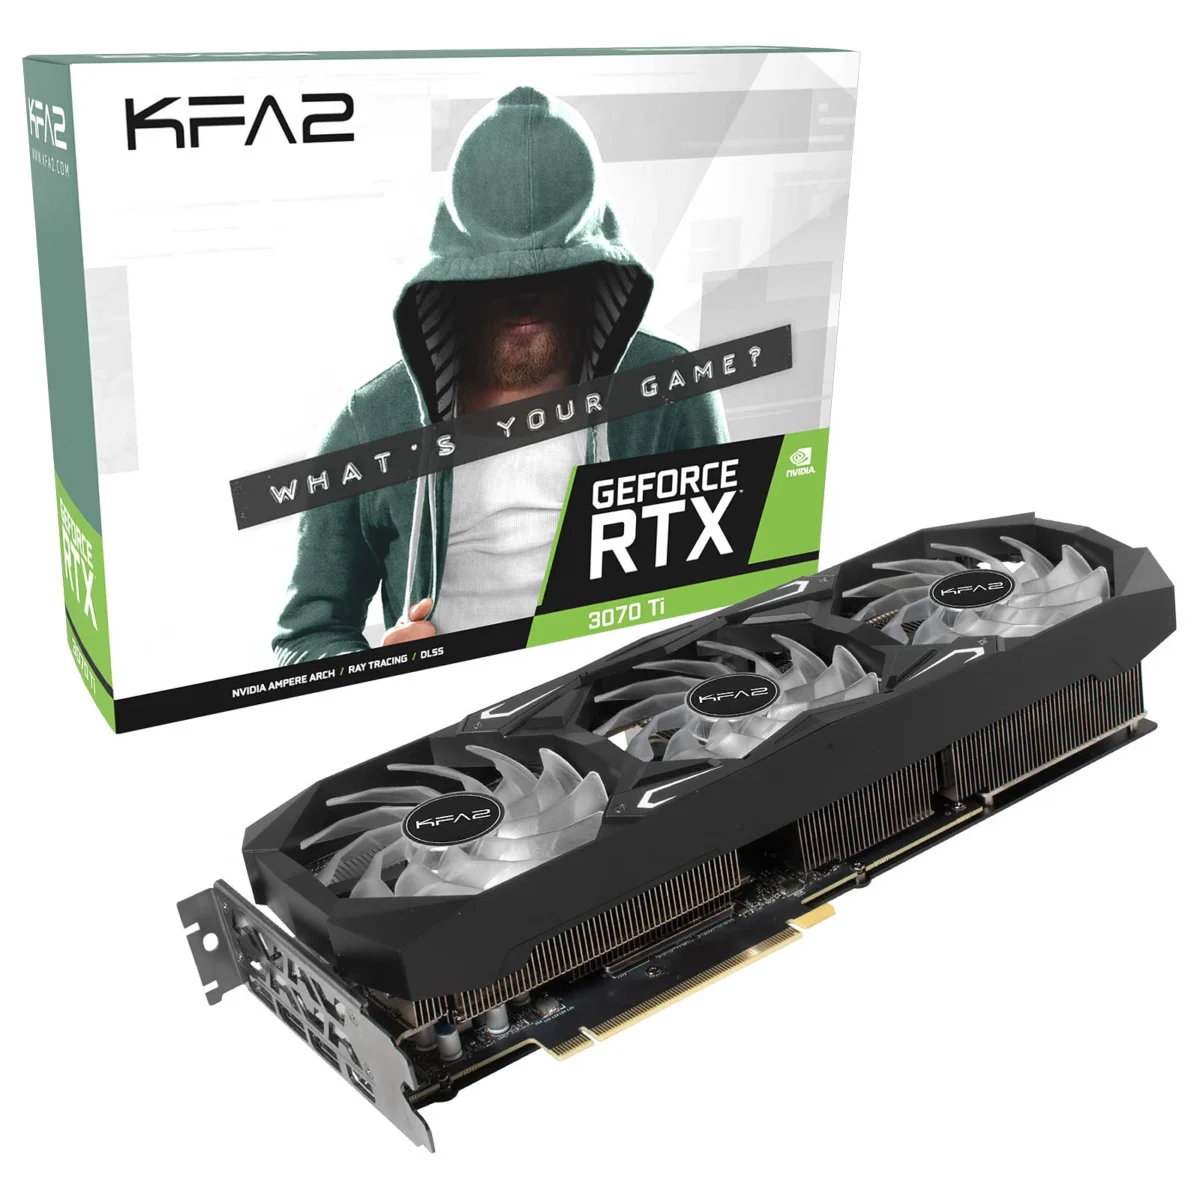 KFA2 GeForce RTX 3070 Ti SG (1-Click OC)